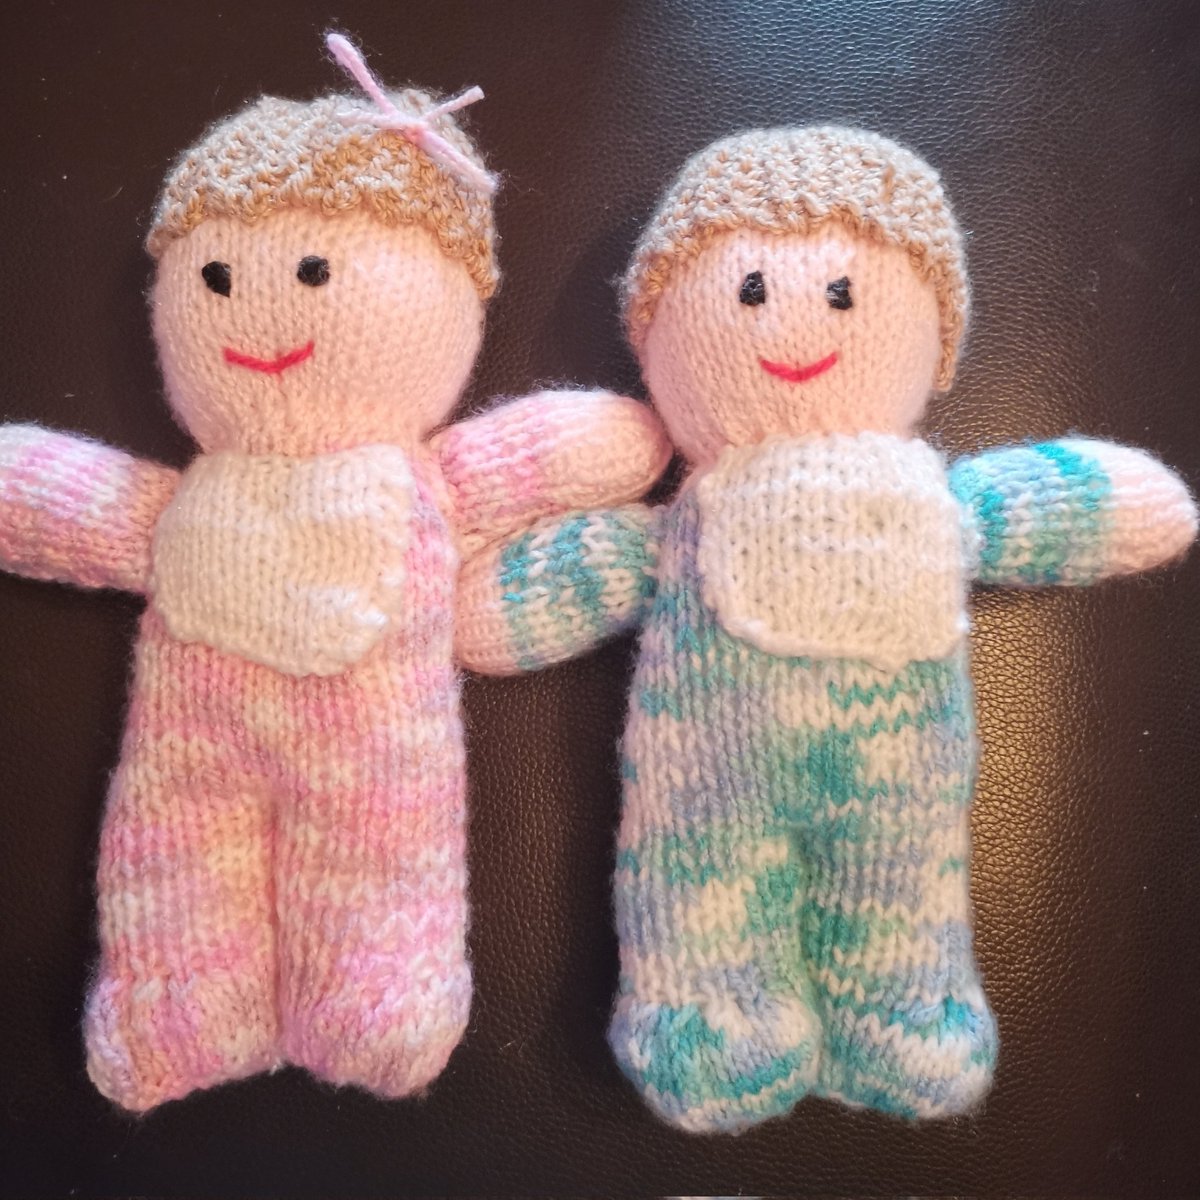 2 Jean Greenhowe baby dolls ready to go in shoeboxes.
#jeangreenhowe #ipackedashoebox #OperationChristmasChild
@OCC_UK